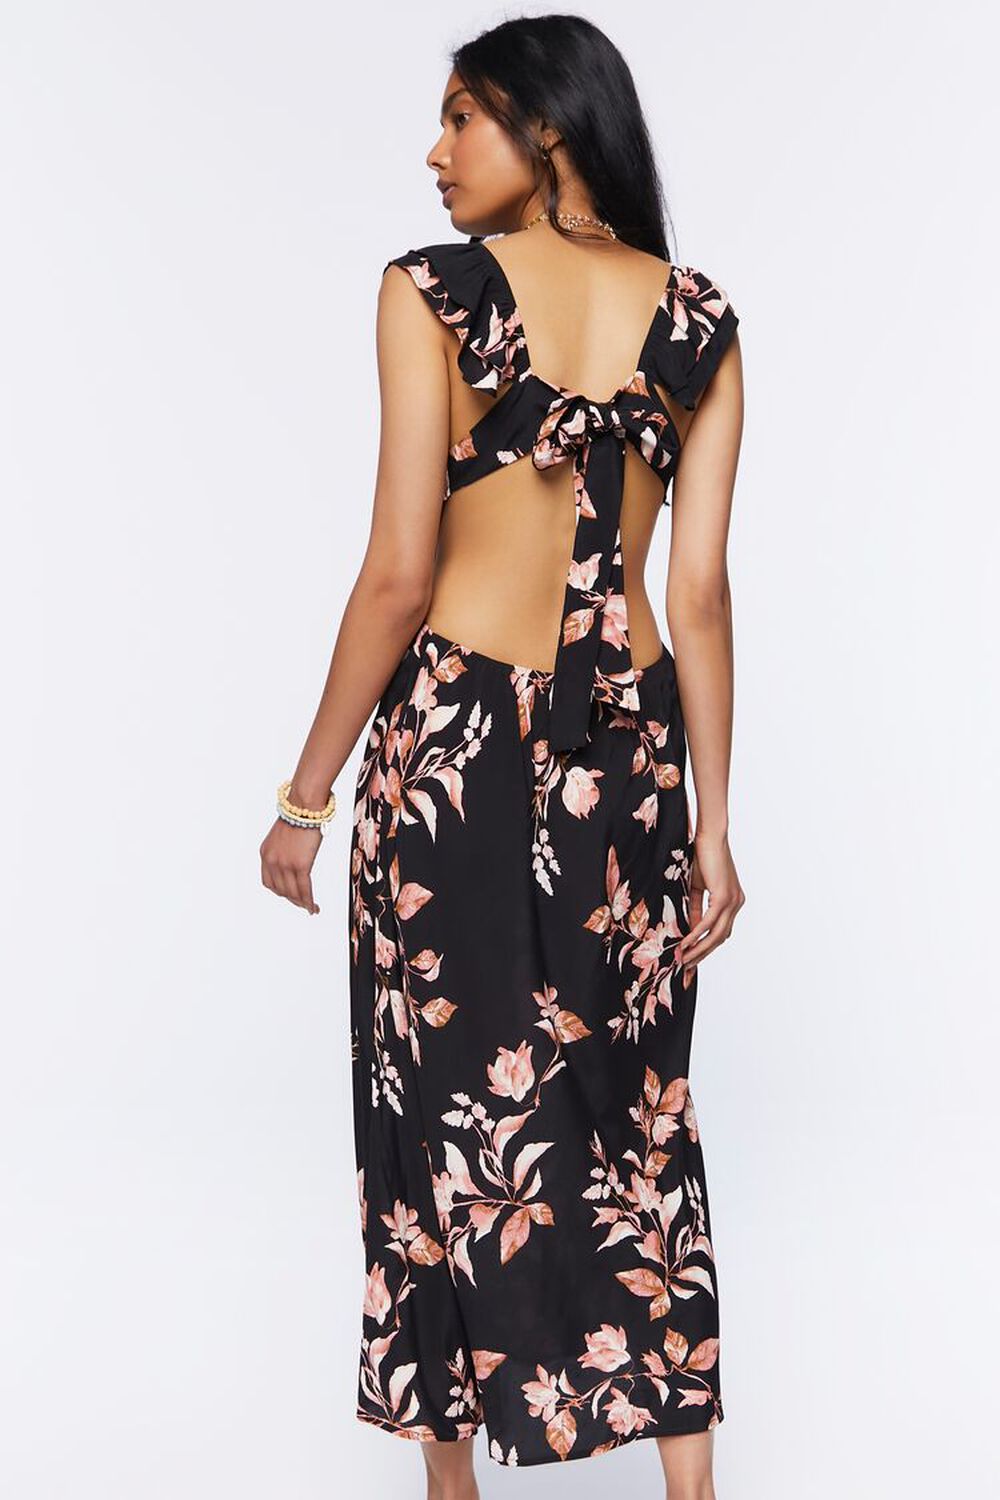 BLACK/MULTI Floral Print Tie-Back Midi Dress, image 3